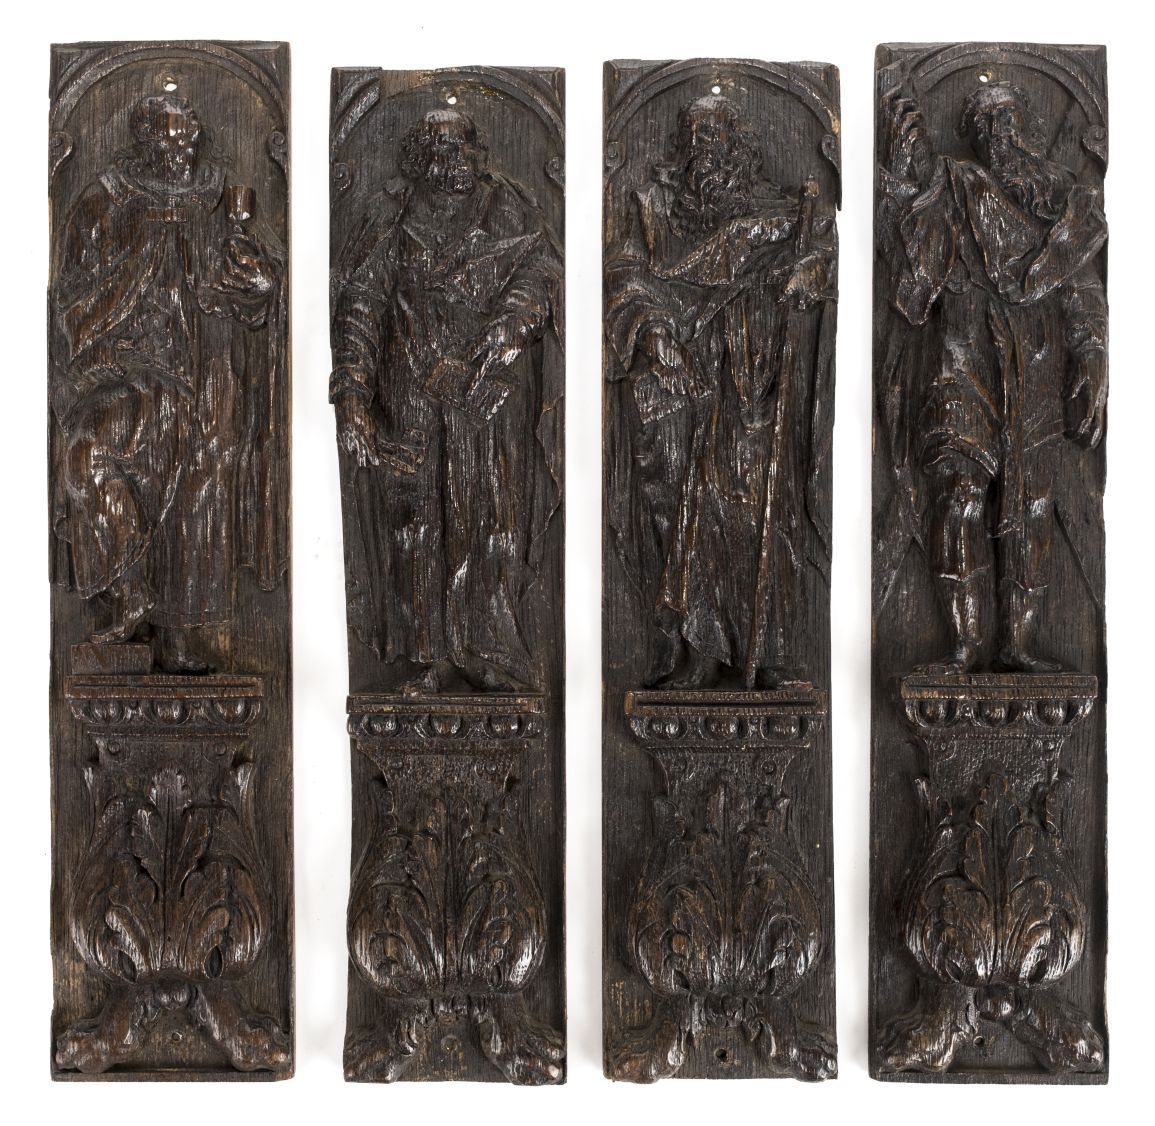 *Carved Oak Panels. Set of four antique carved oak panels, probably 17th century, carved as saints